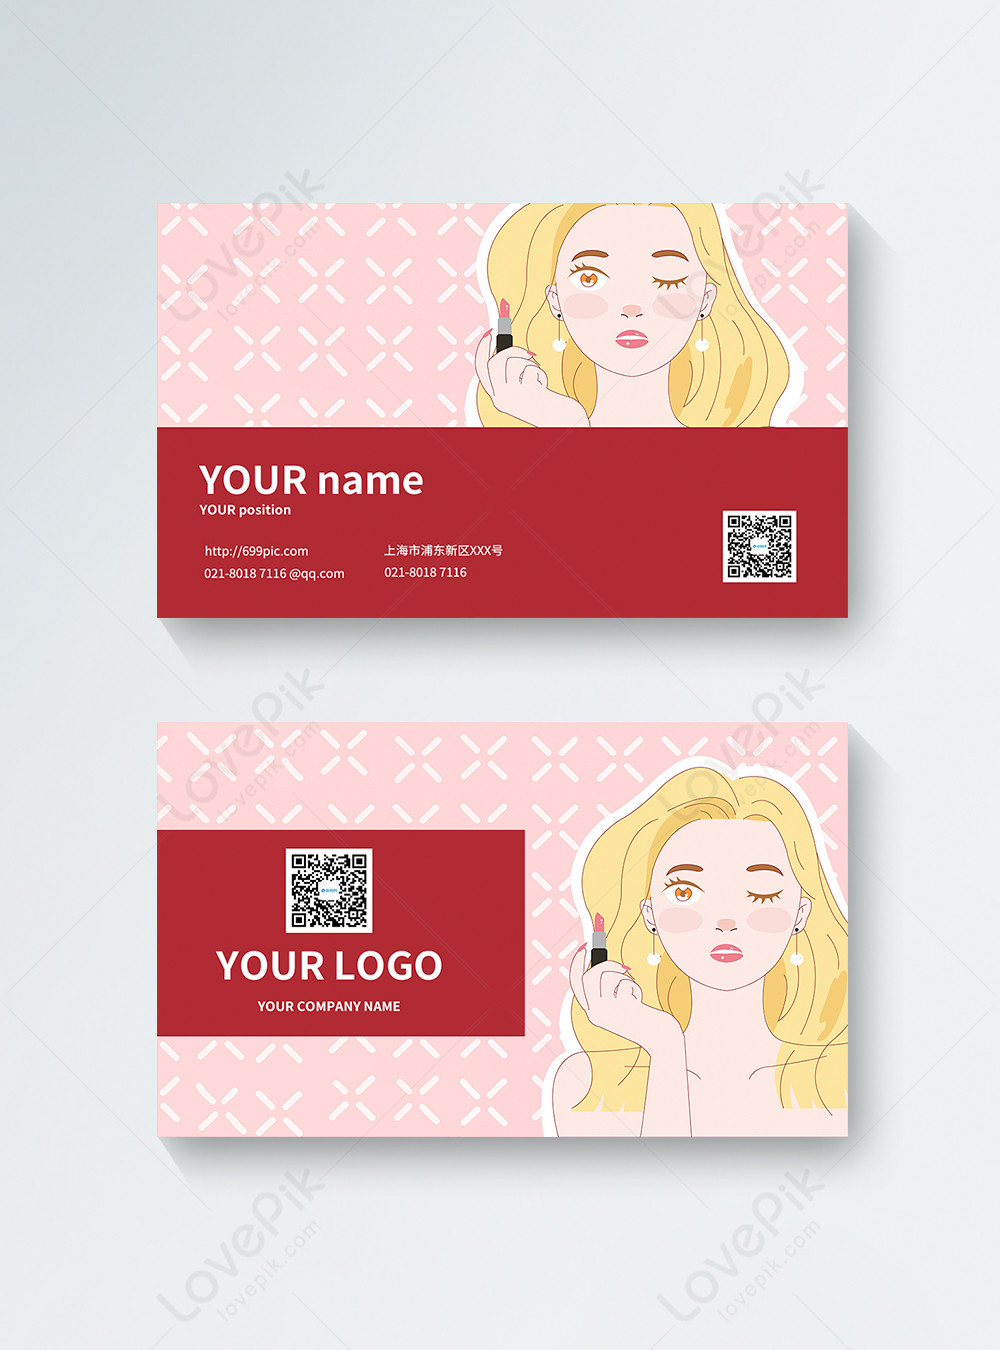 Simple Beauty Salon Business Card Design Template Image Picture Free Download 401421377 Lovepik Com